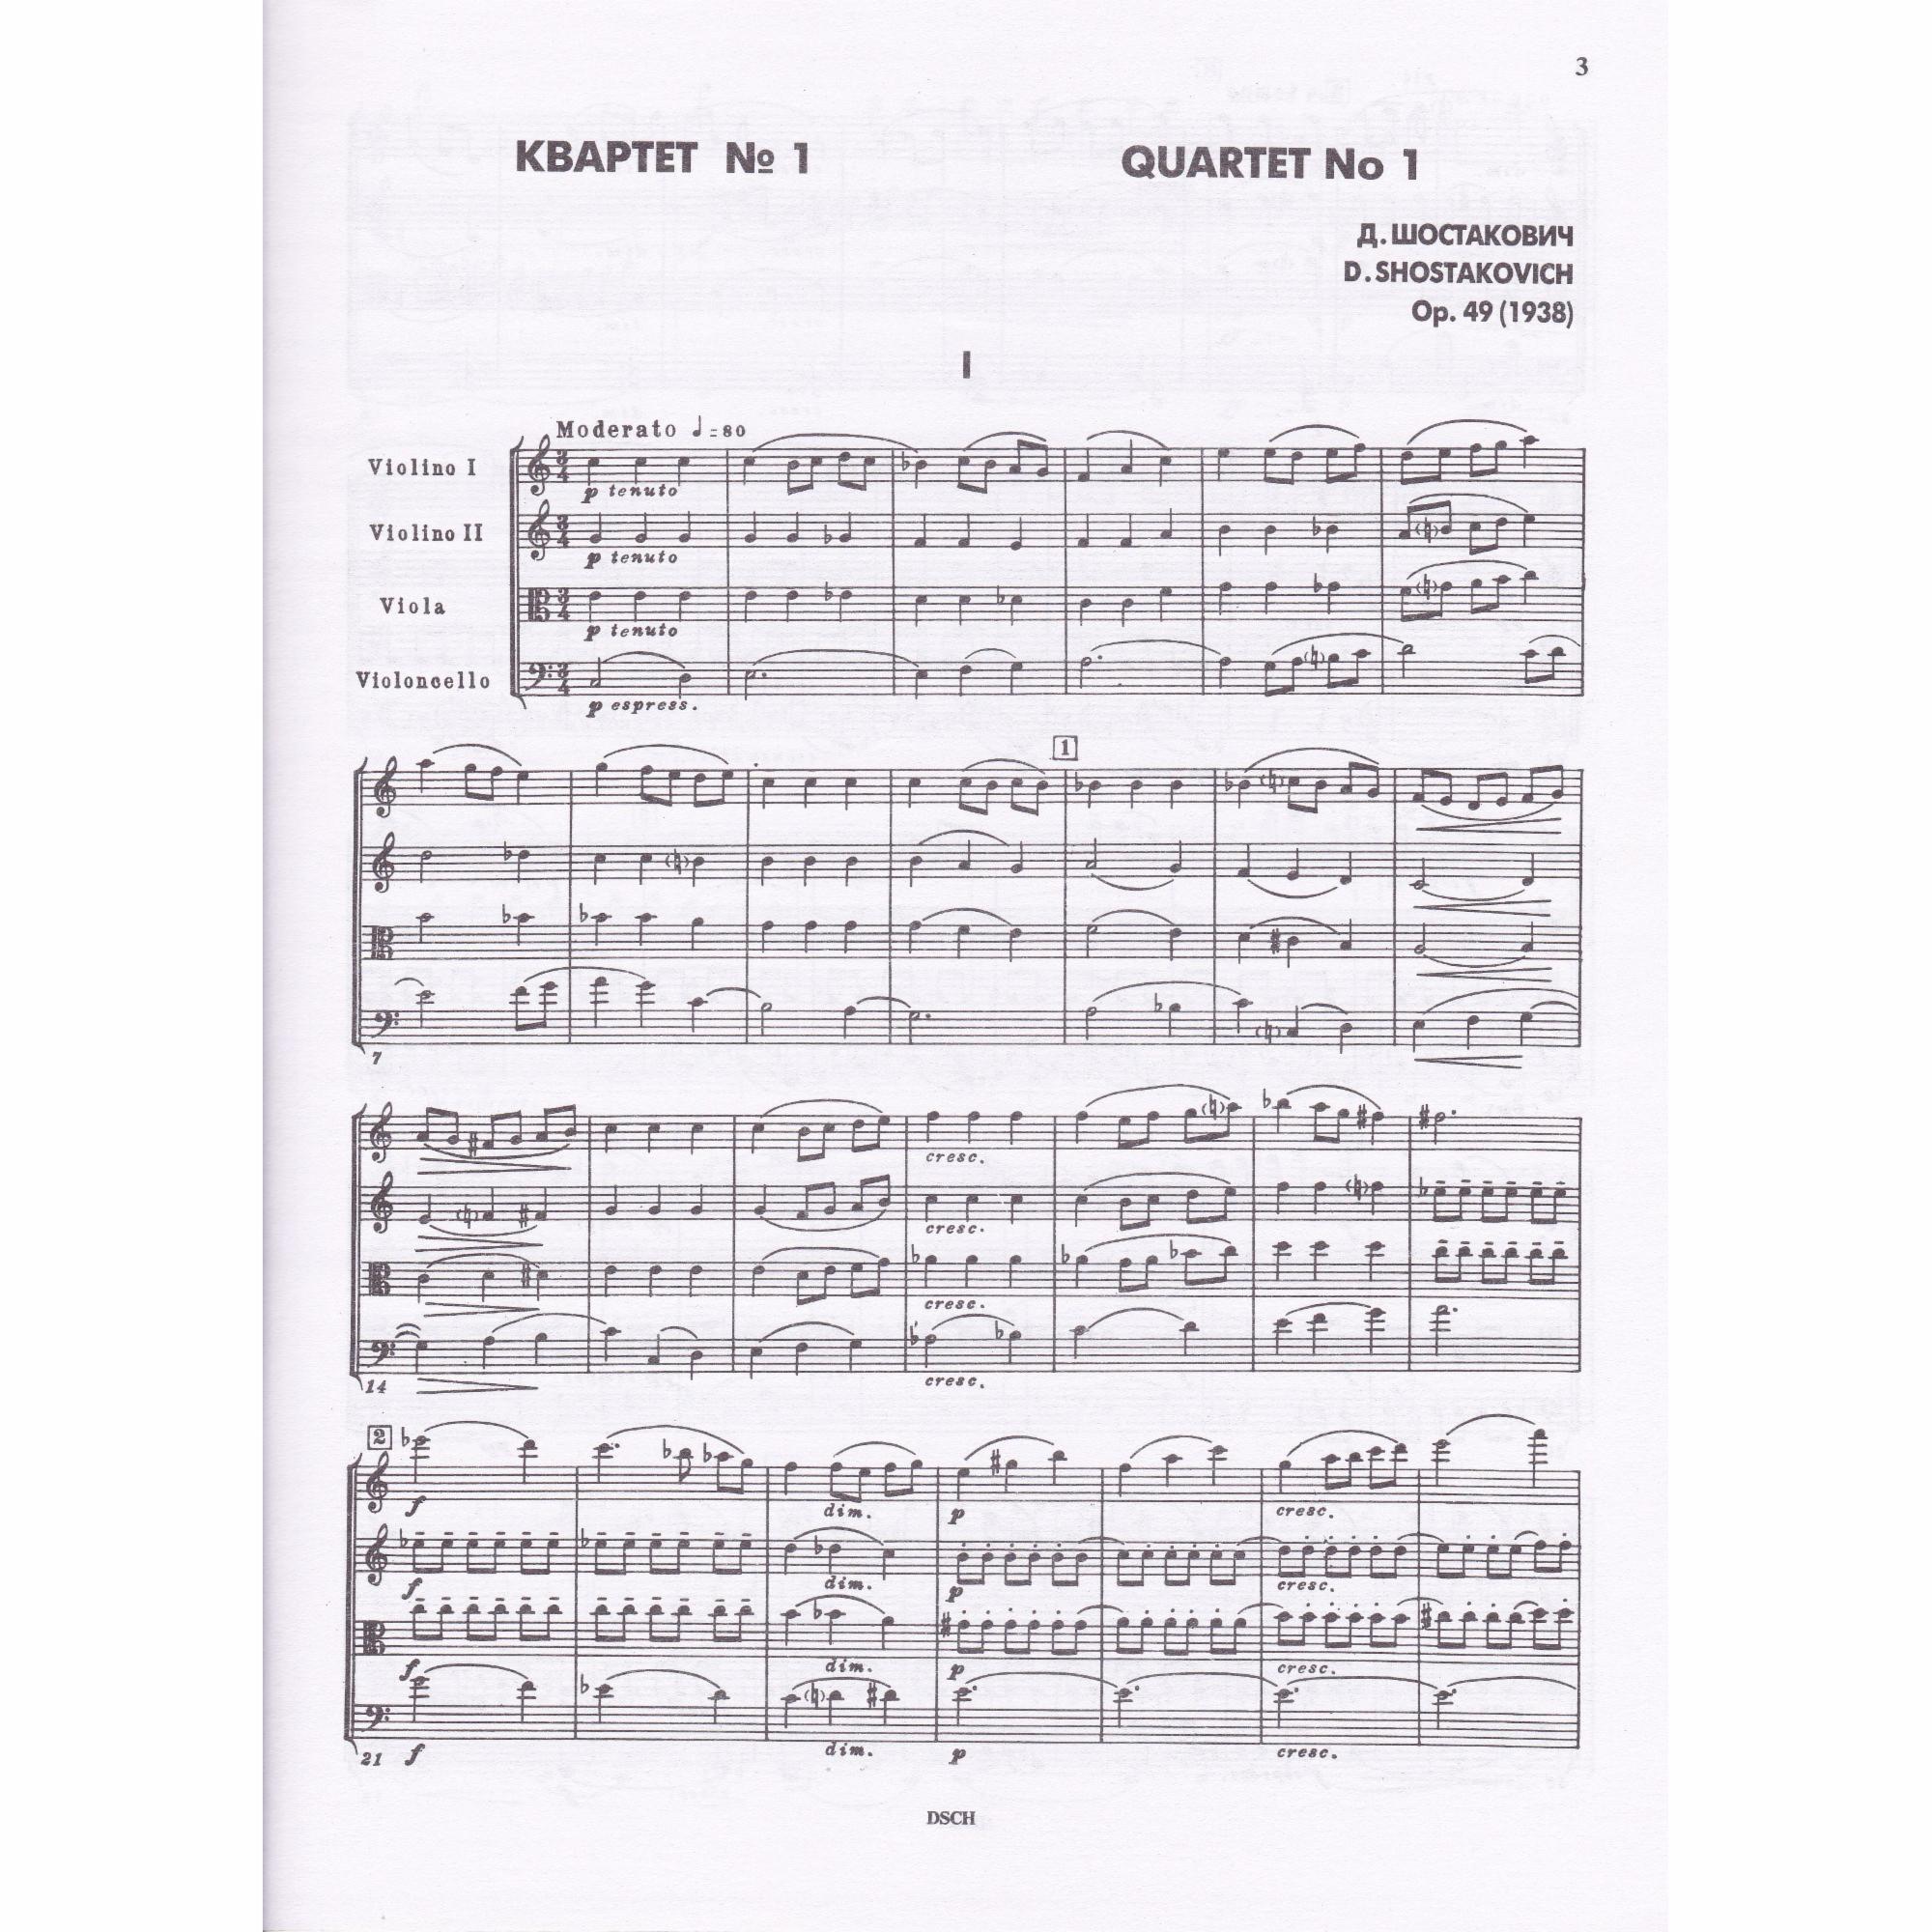 Scores to the String Quartets of Dmitri Shostakovich